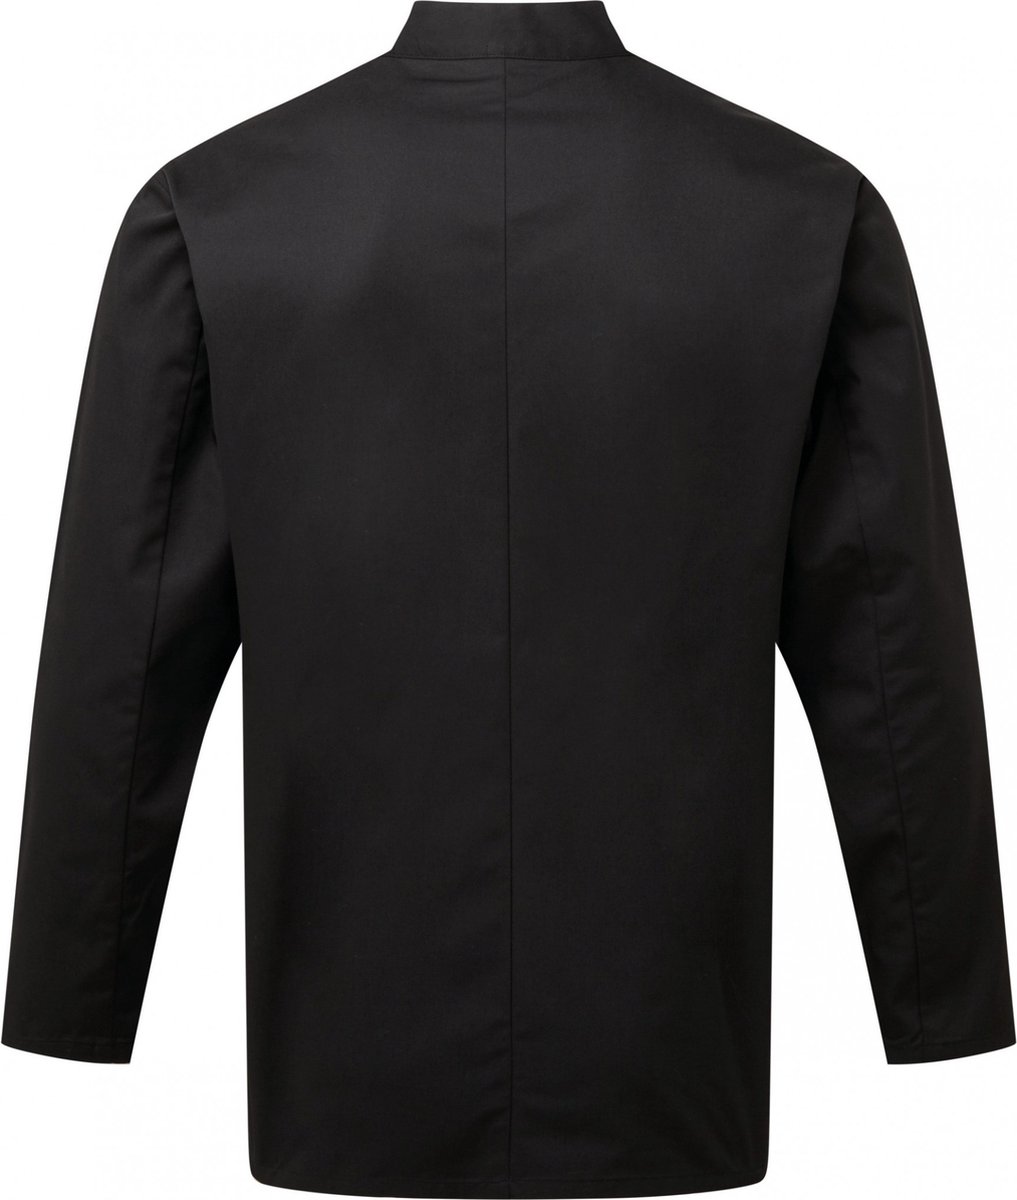 Schort/Tuniek/Werkblouse Unisex 3XL Premier Black 65% Polyester, 35% Katoen